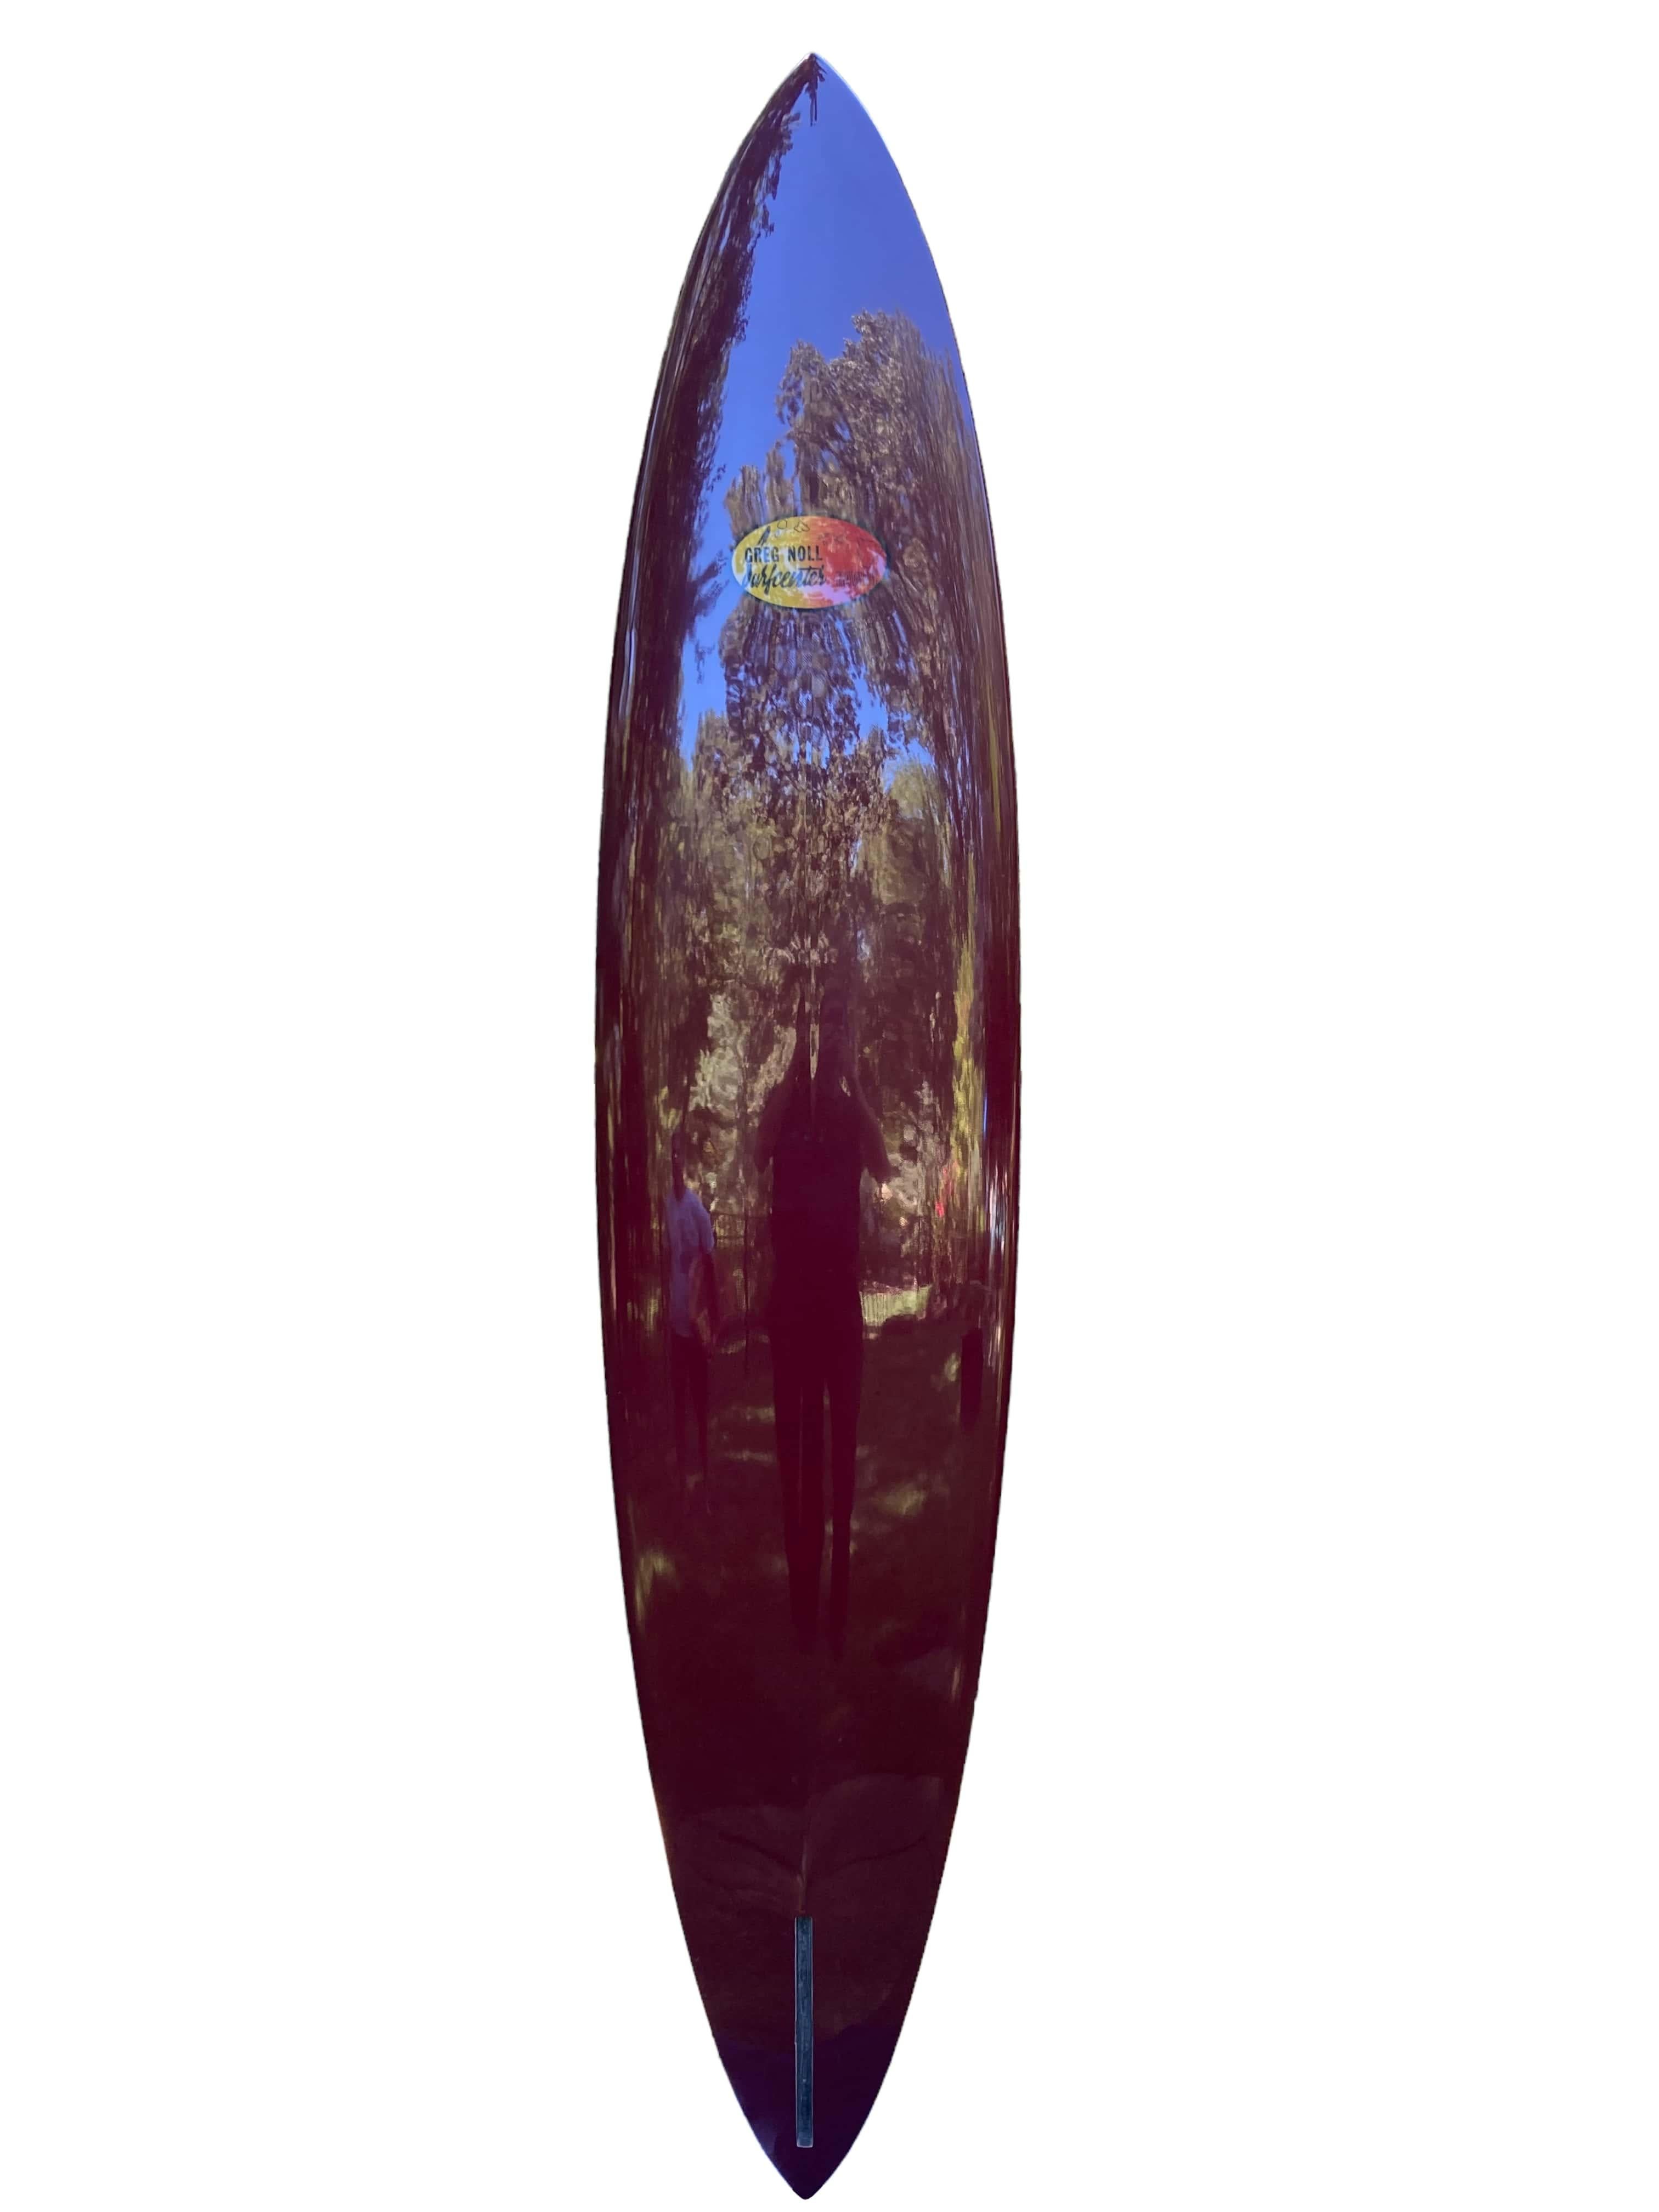 Buffalo Keaulana’s personal surfboard made in 1969 by the late Ben Aipa (1942-2021). Shaped for Hawaiian surfing legend, Buffalo Keaulana, 2005 inductee into the Surfing Walk of Fame in Huntington Beach, California, 2010 inductee into the Hawaii